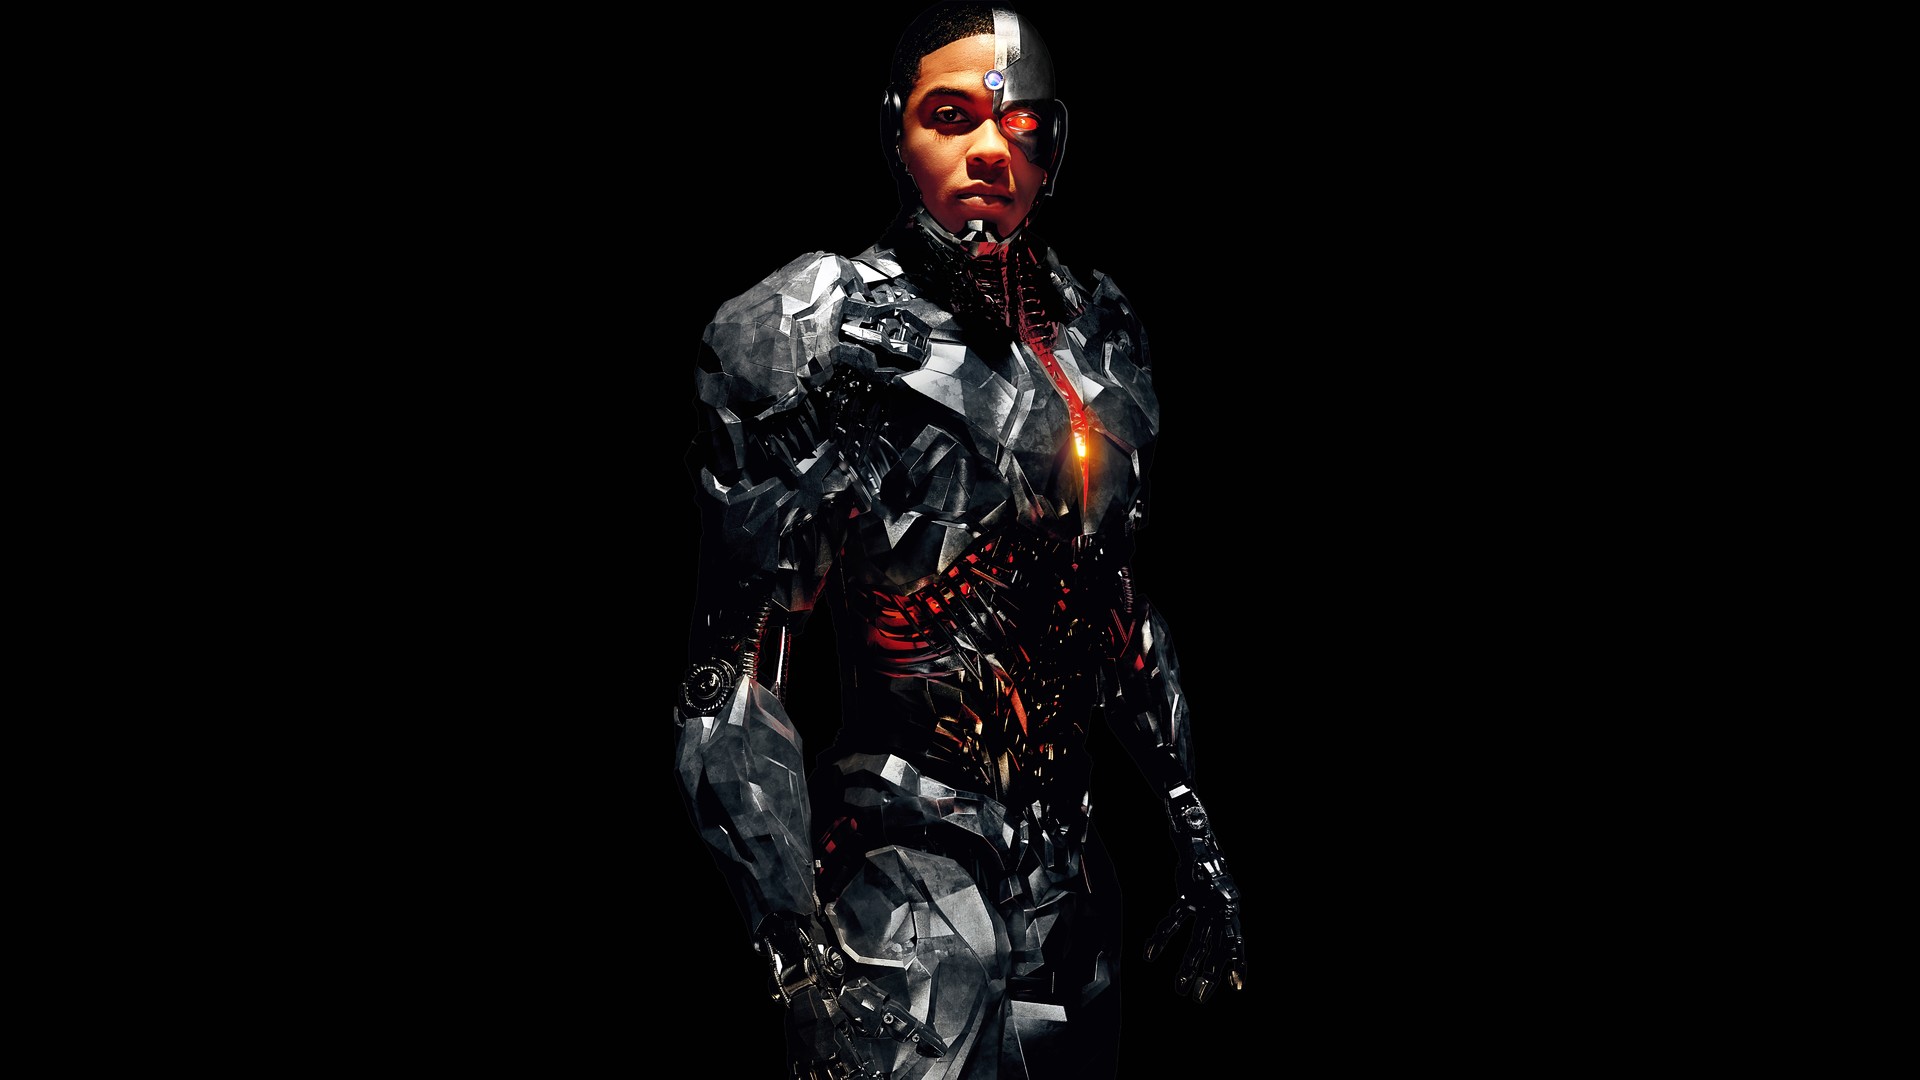 Cyborg HD Wallpaper Background Image 1920x1080 ID878604